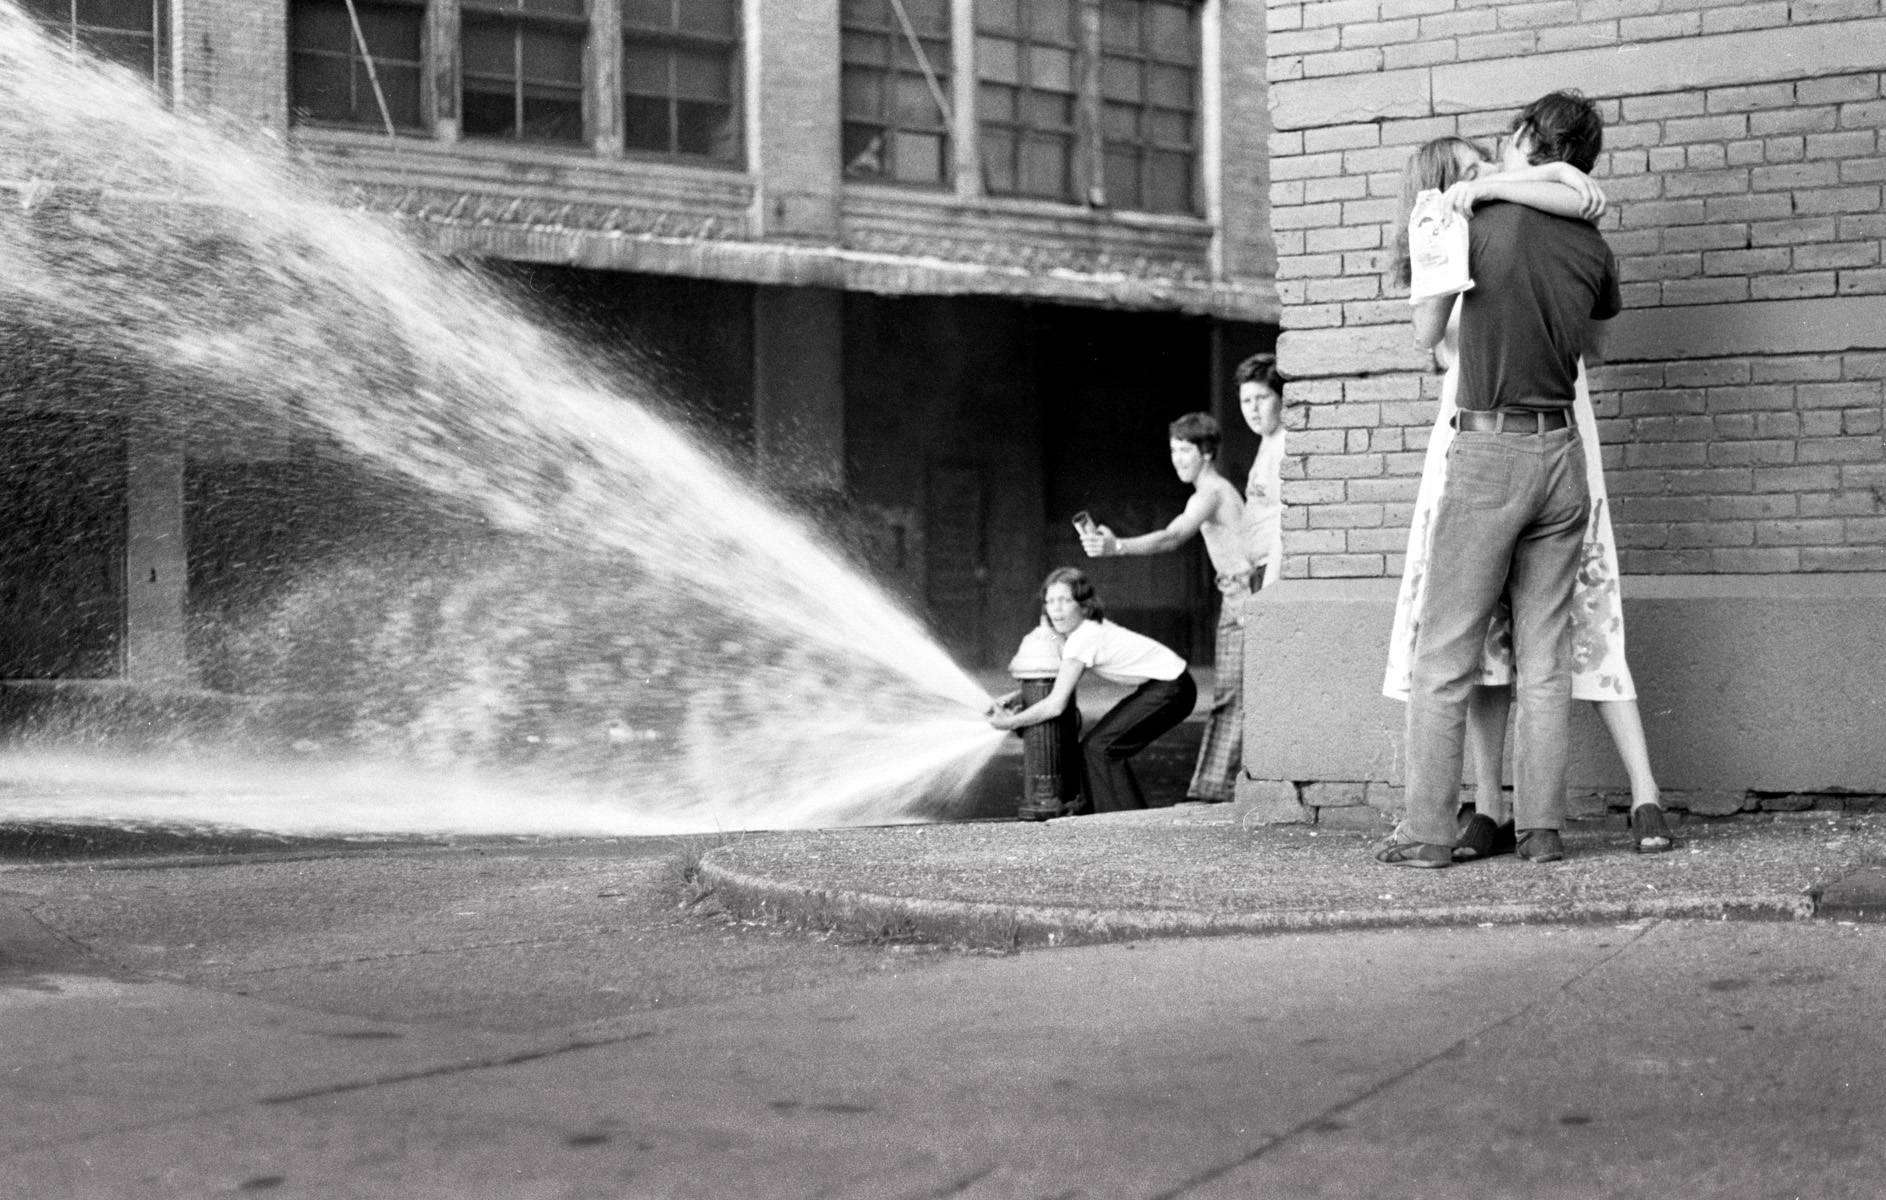 Robert Herman Black and White Photograph - Soho Heat Wave Photograph Manhattan 1978 (New York City, Summer)